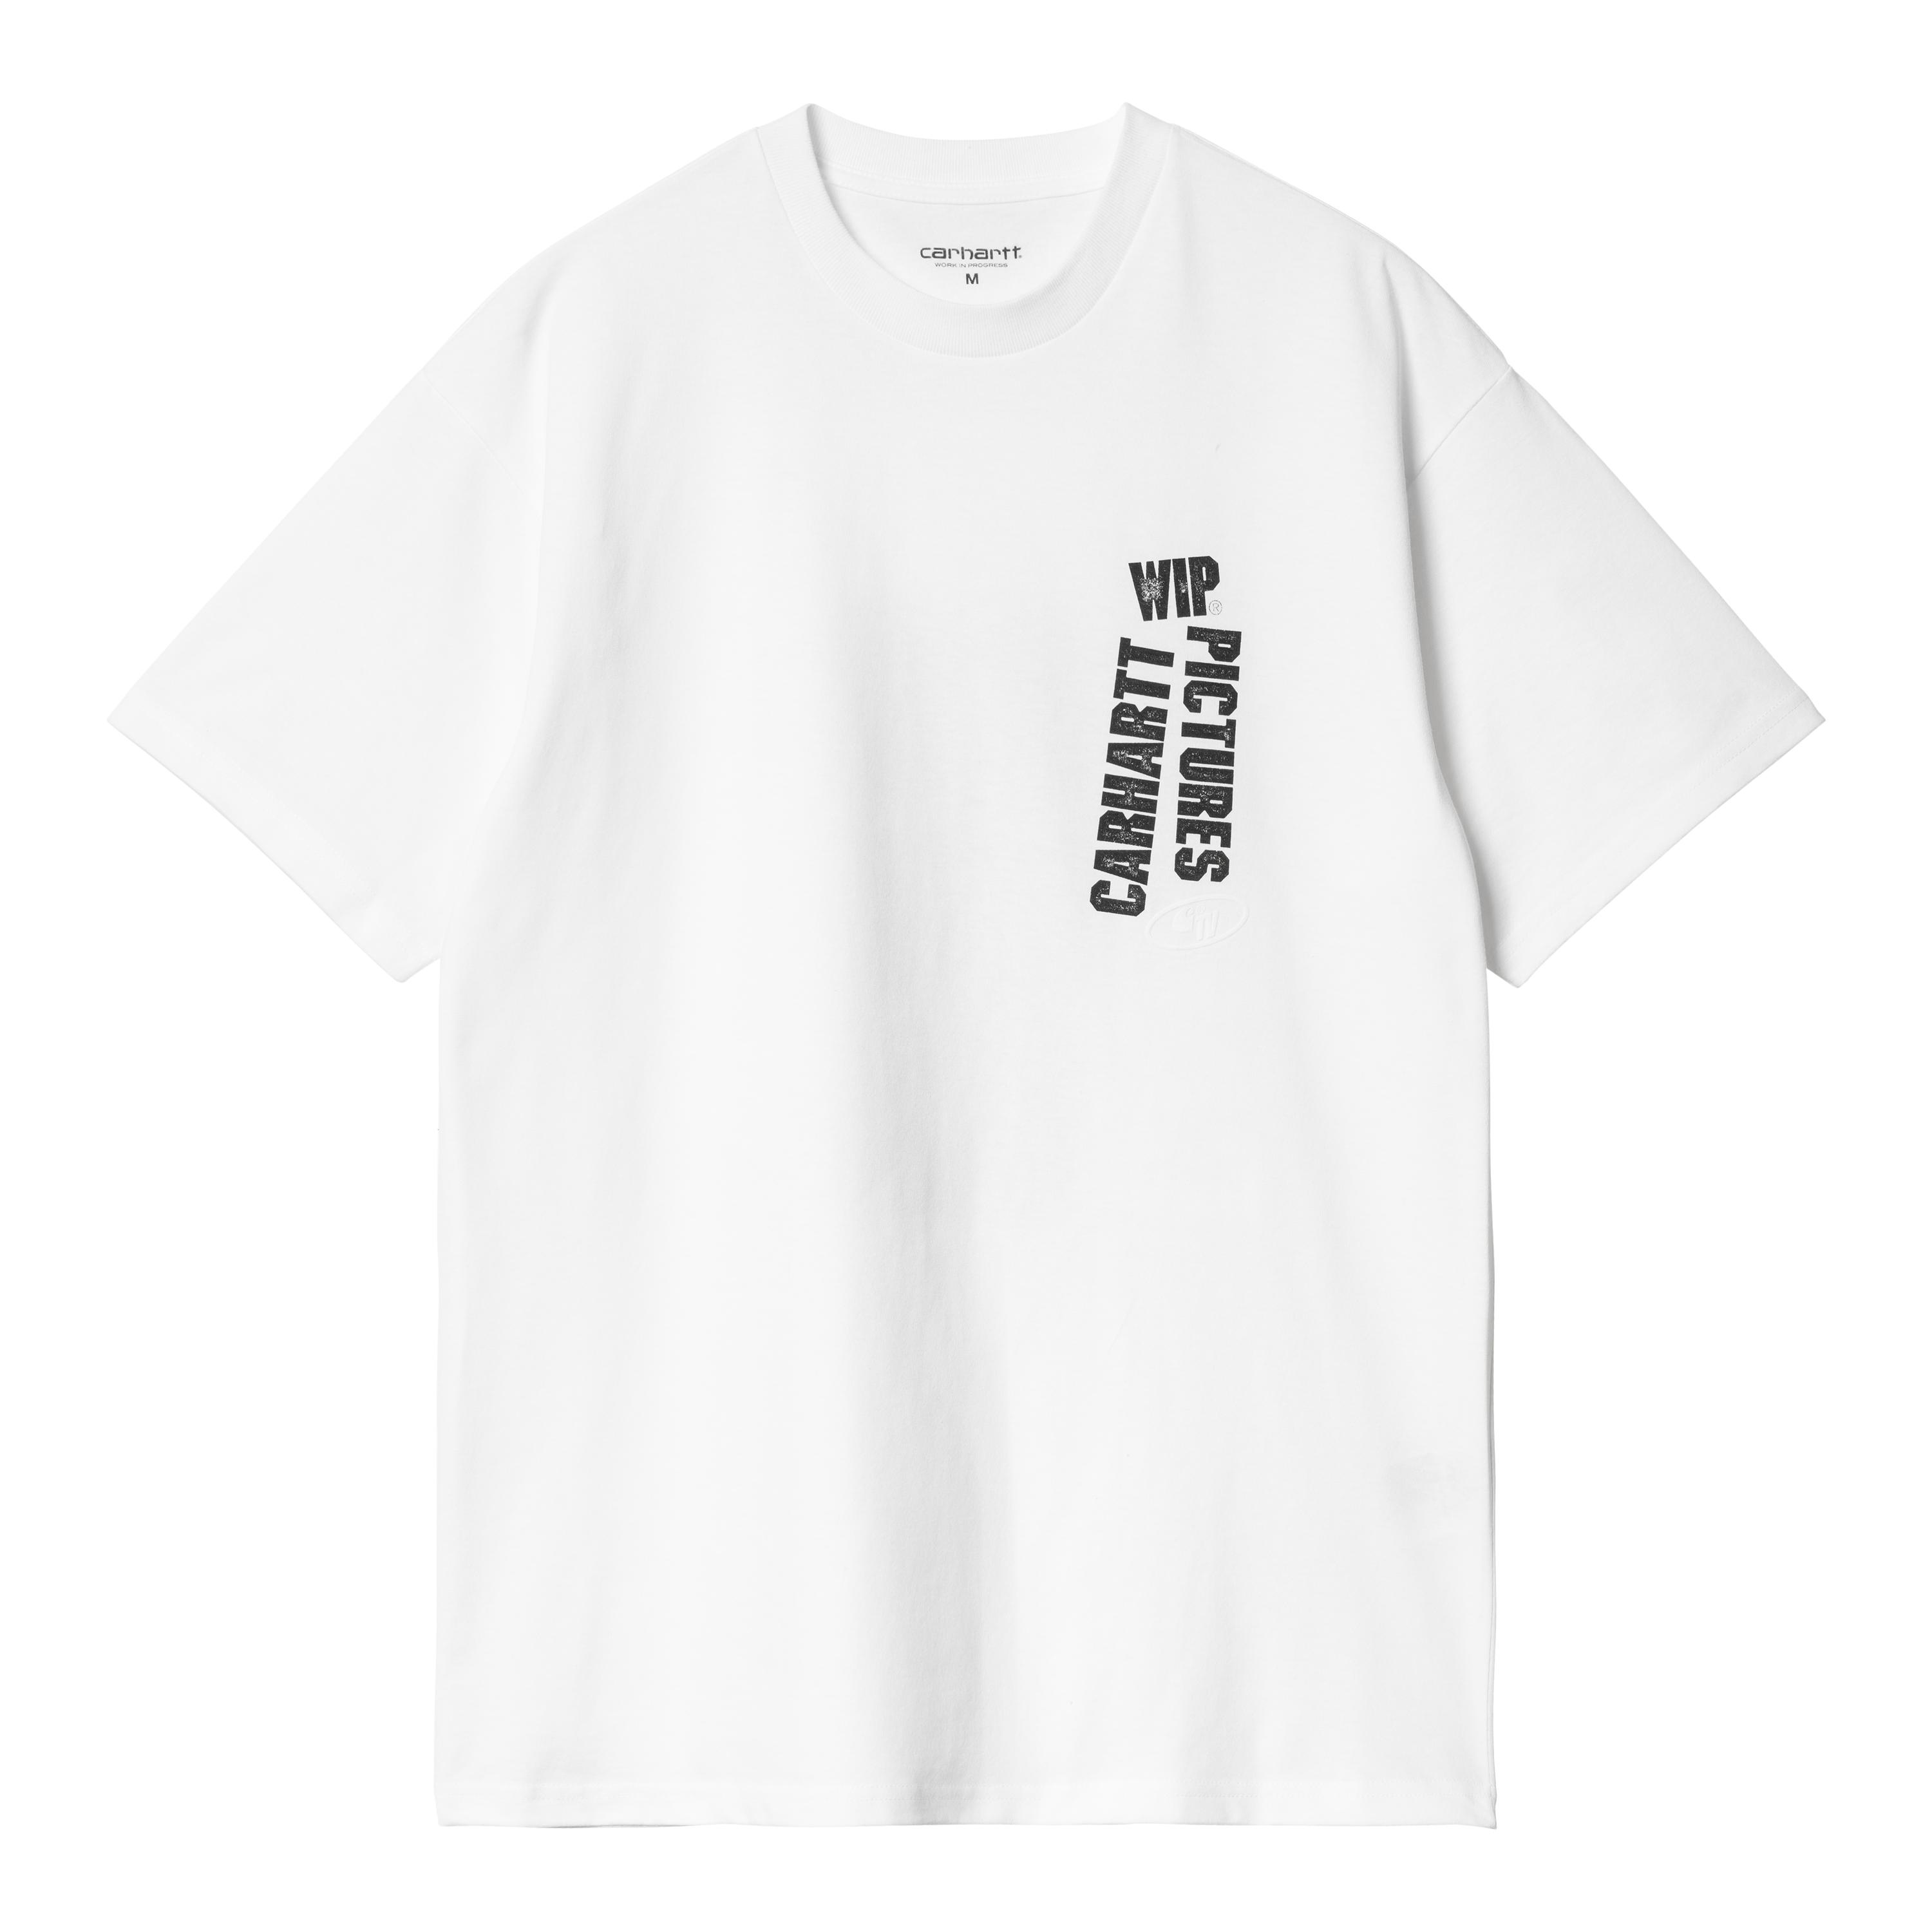 Carhartt WIP Short Sleeve Wip Pictures T-Shirt en Blanco